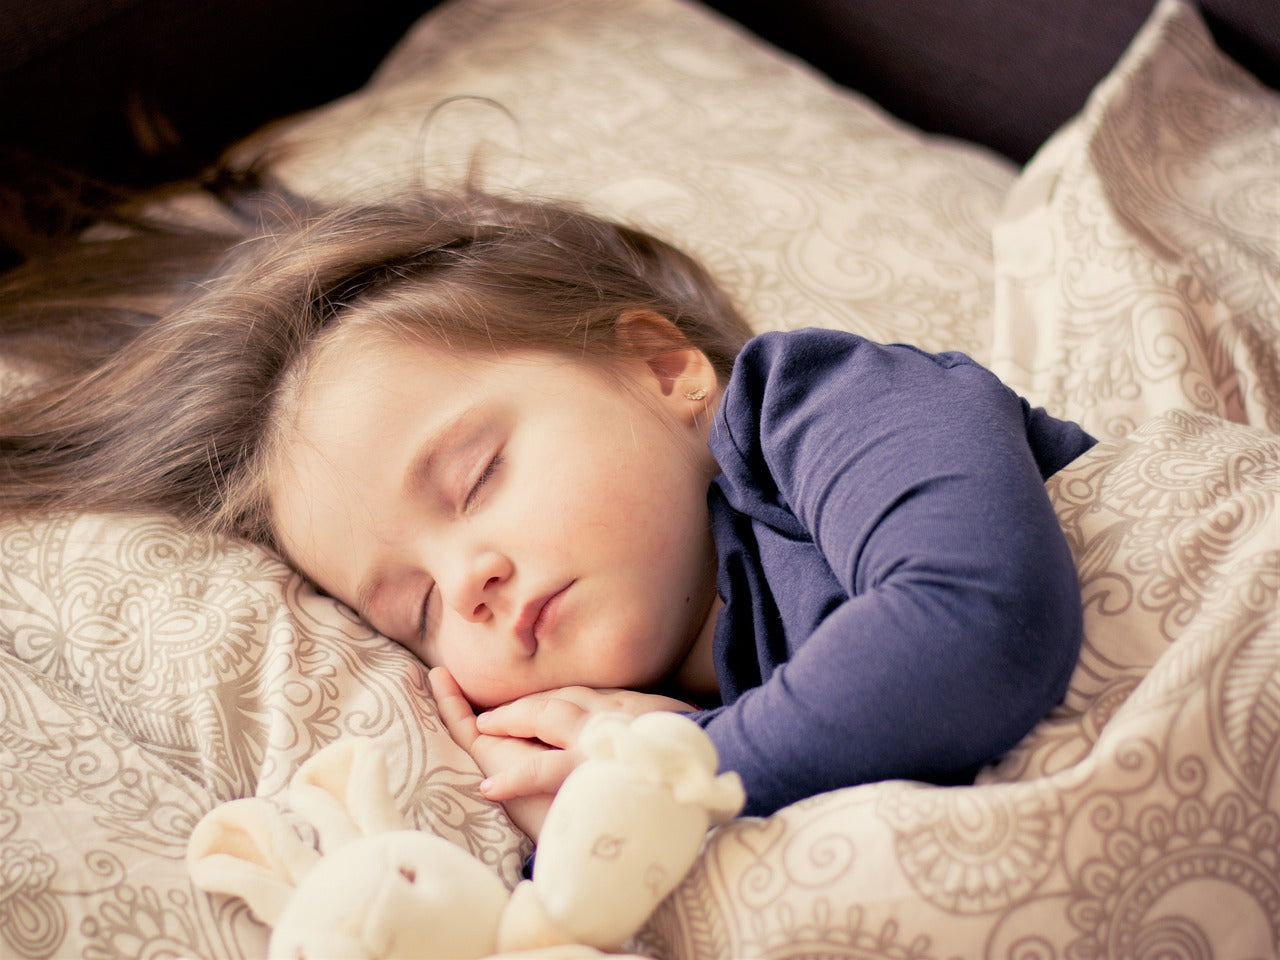 Importance of sleep for children